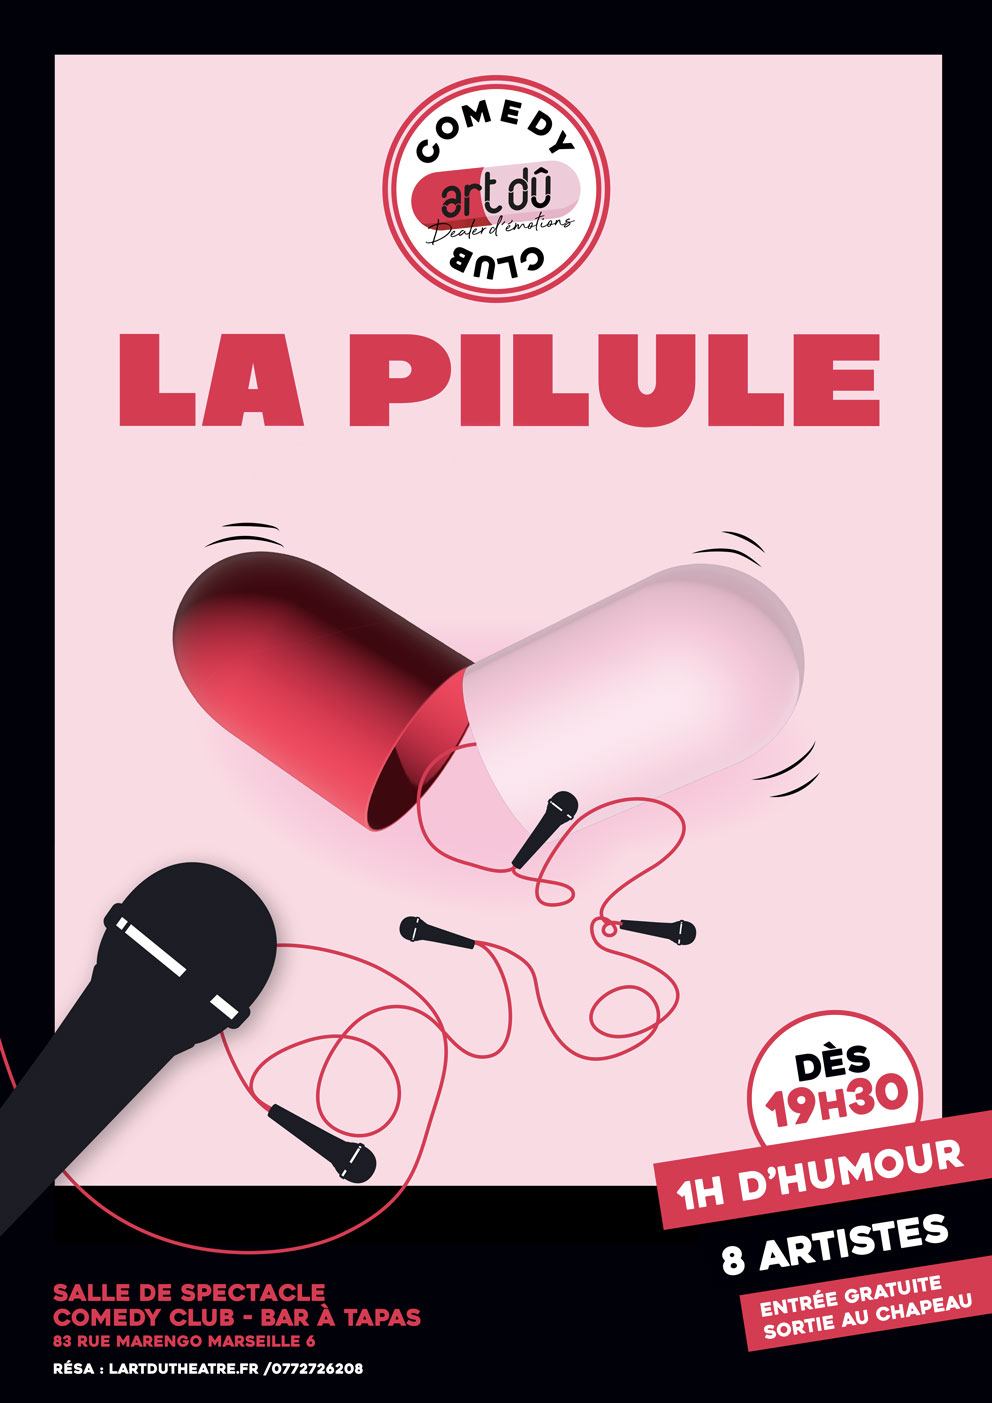 Pilule---Stand-Up---Comedy-Club---Marseille---Art-Dû